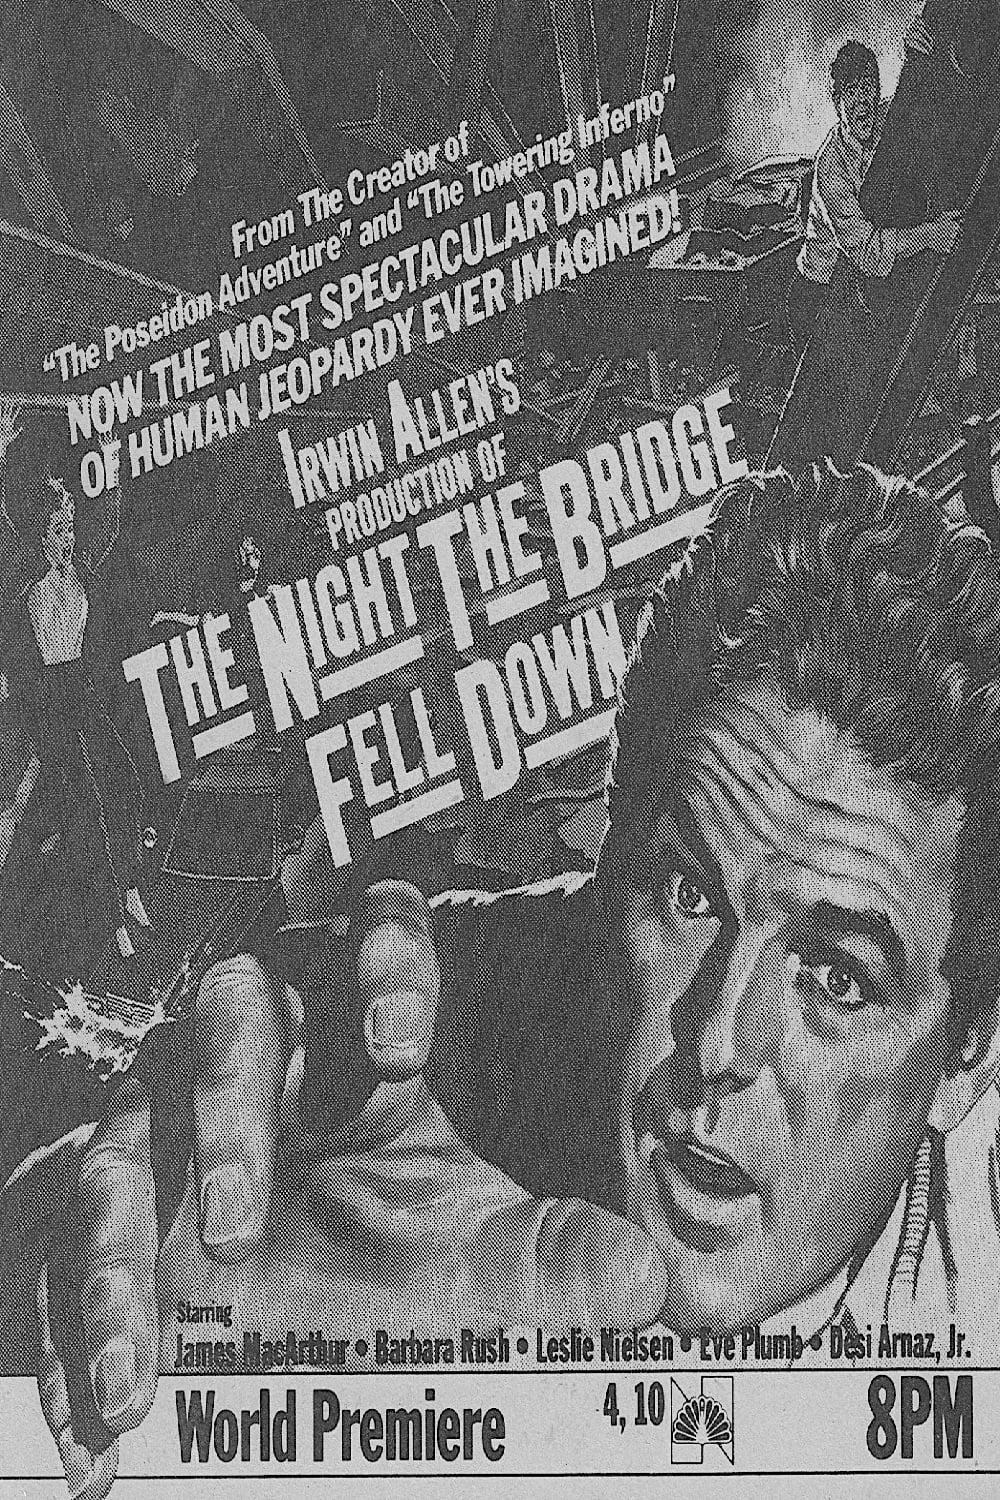 The Night the Bridge Fell Down poster